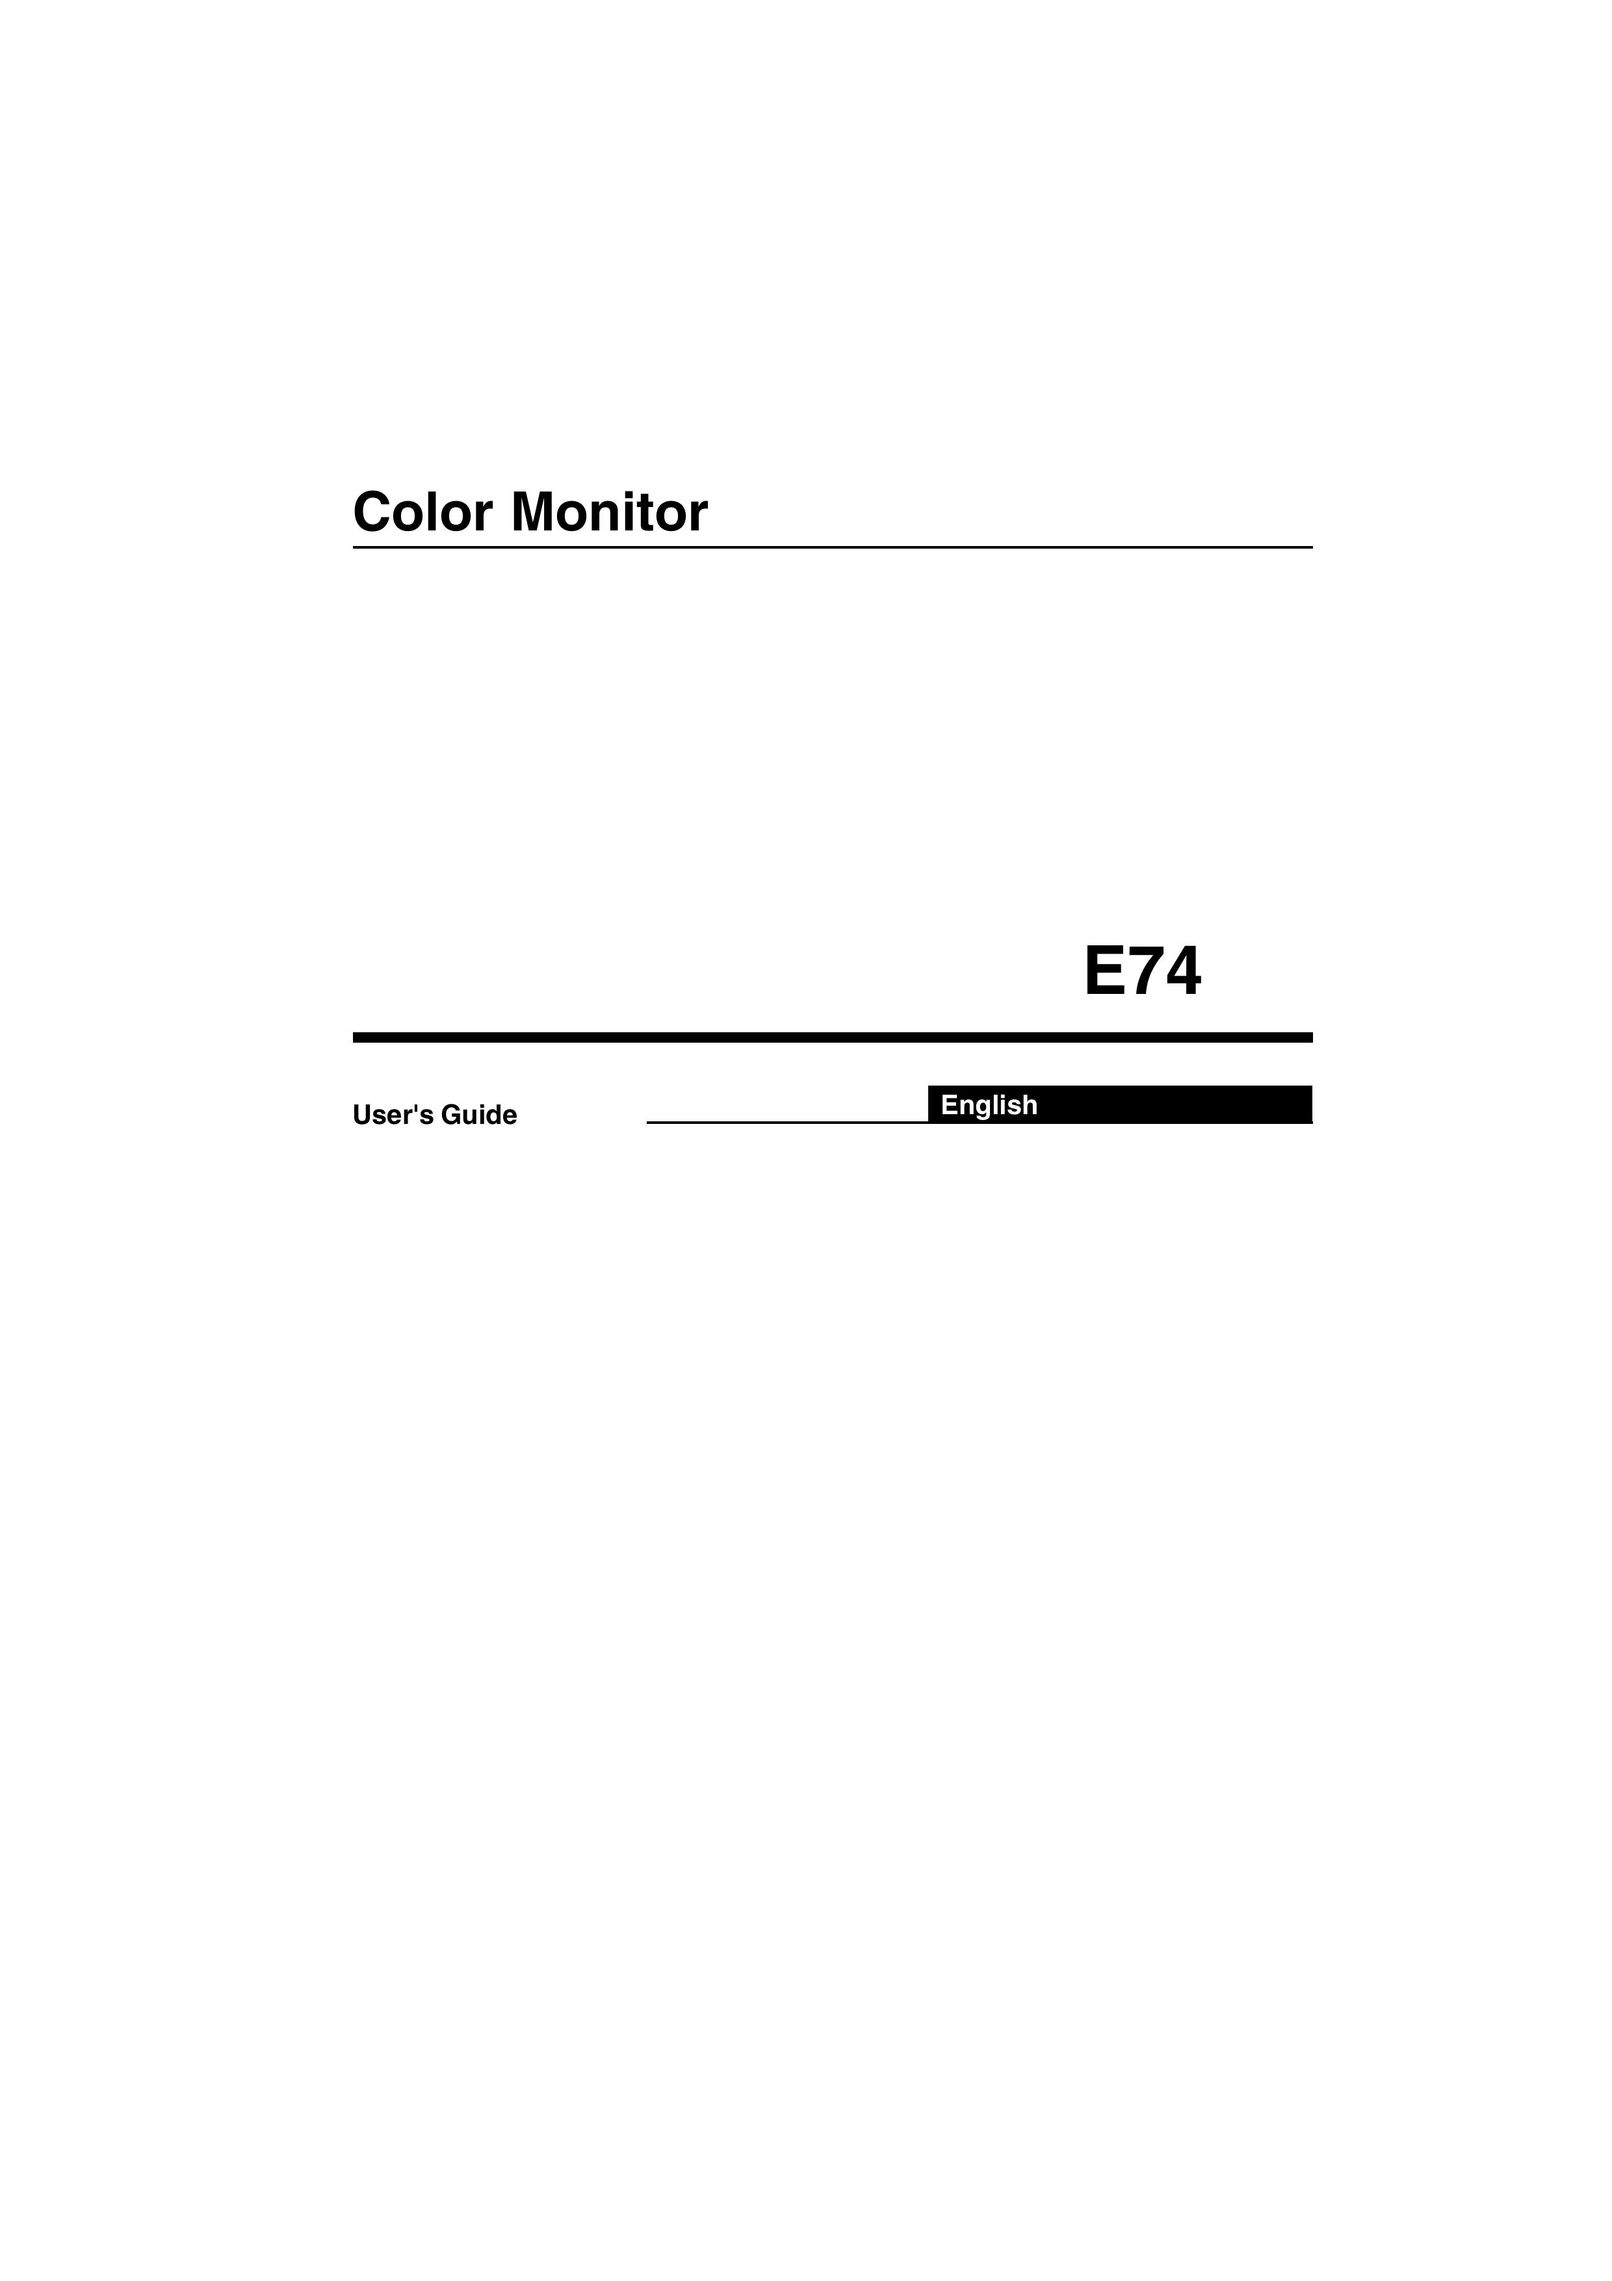 Lenovo E74 Home Theater System User Manual